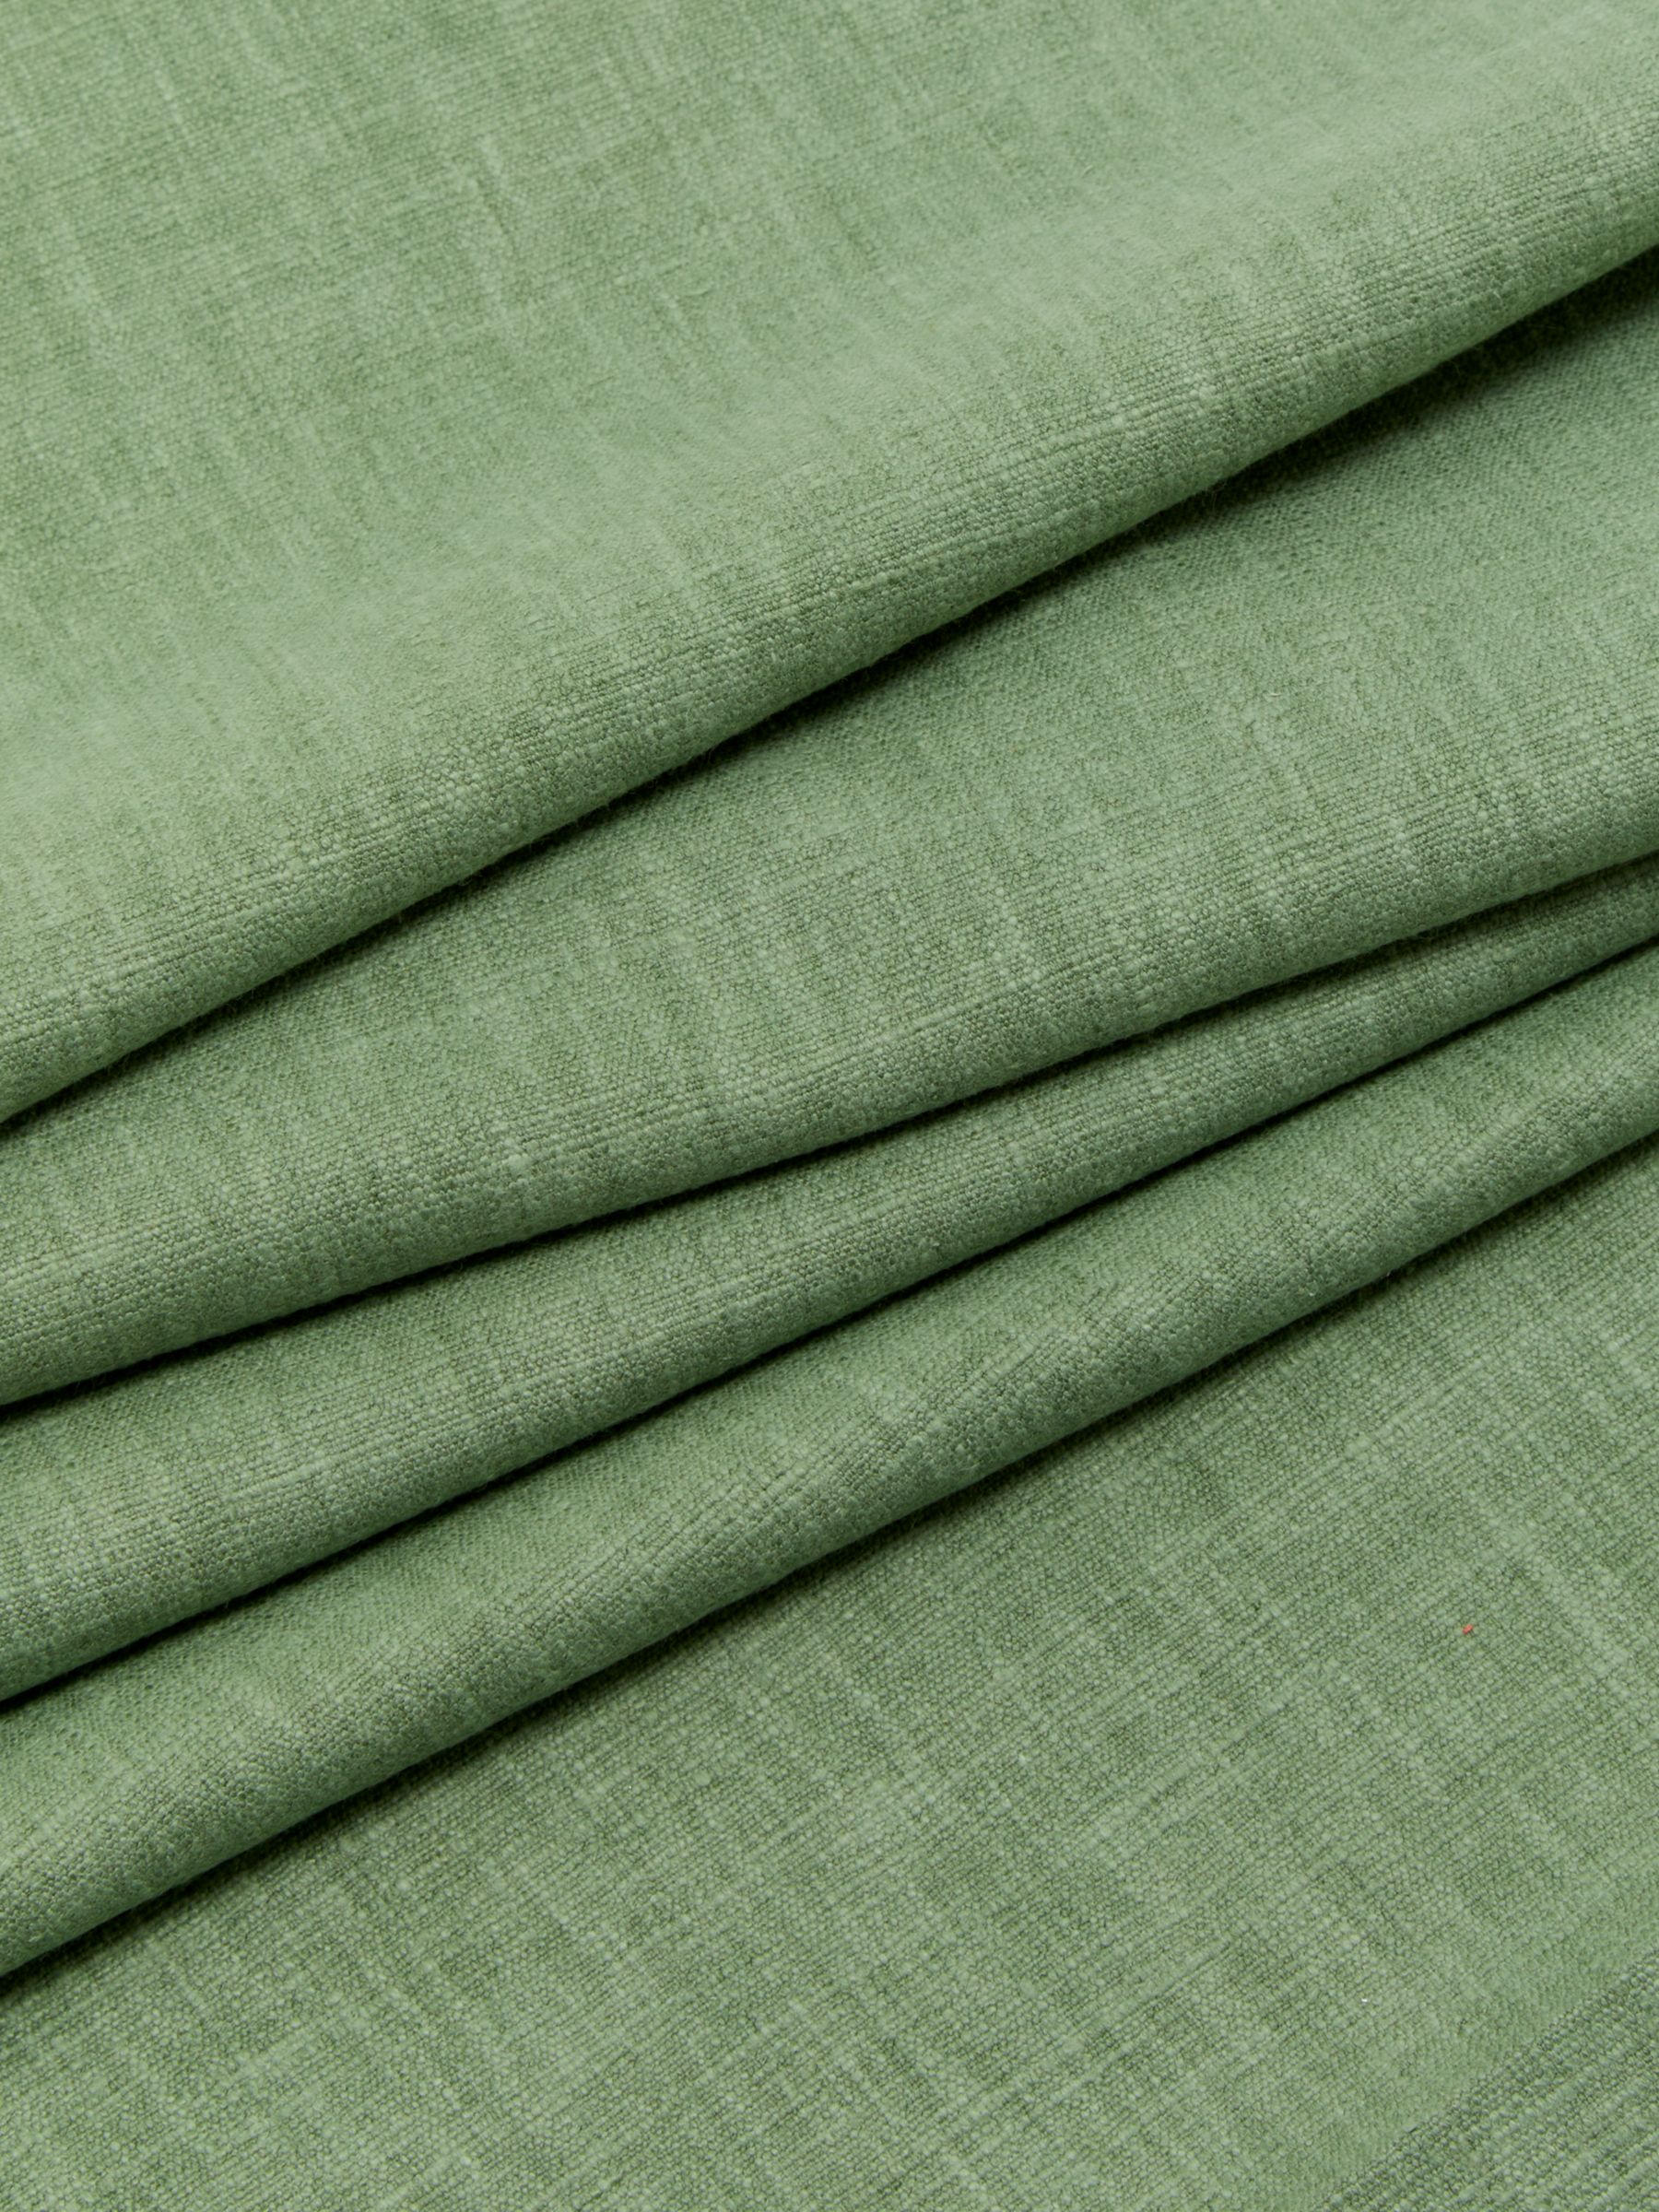 John Lewis Cotton Blend Furnishing Fabric, Myrtle